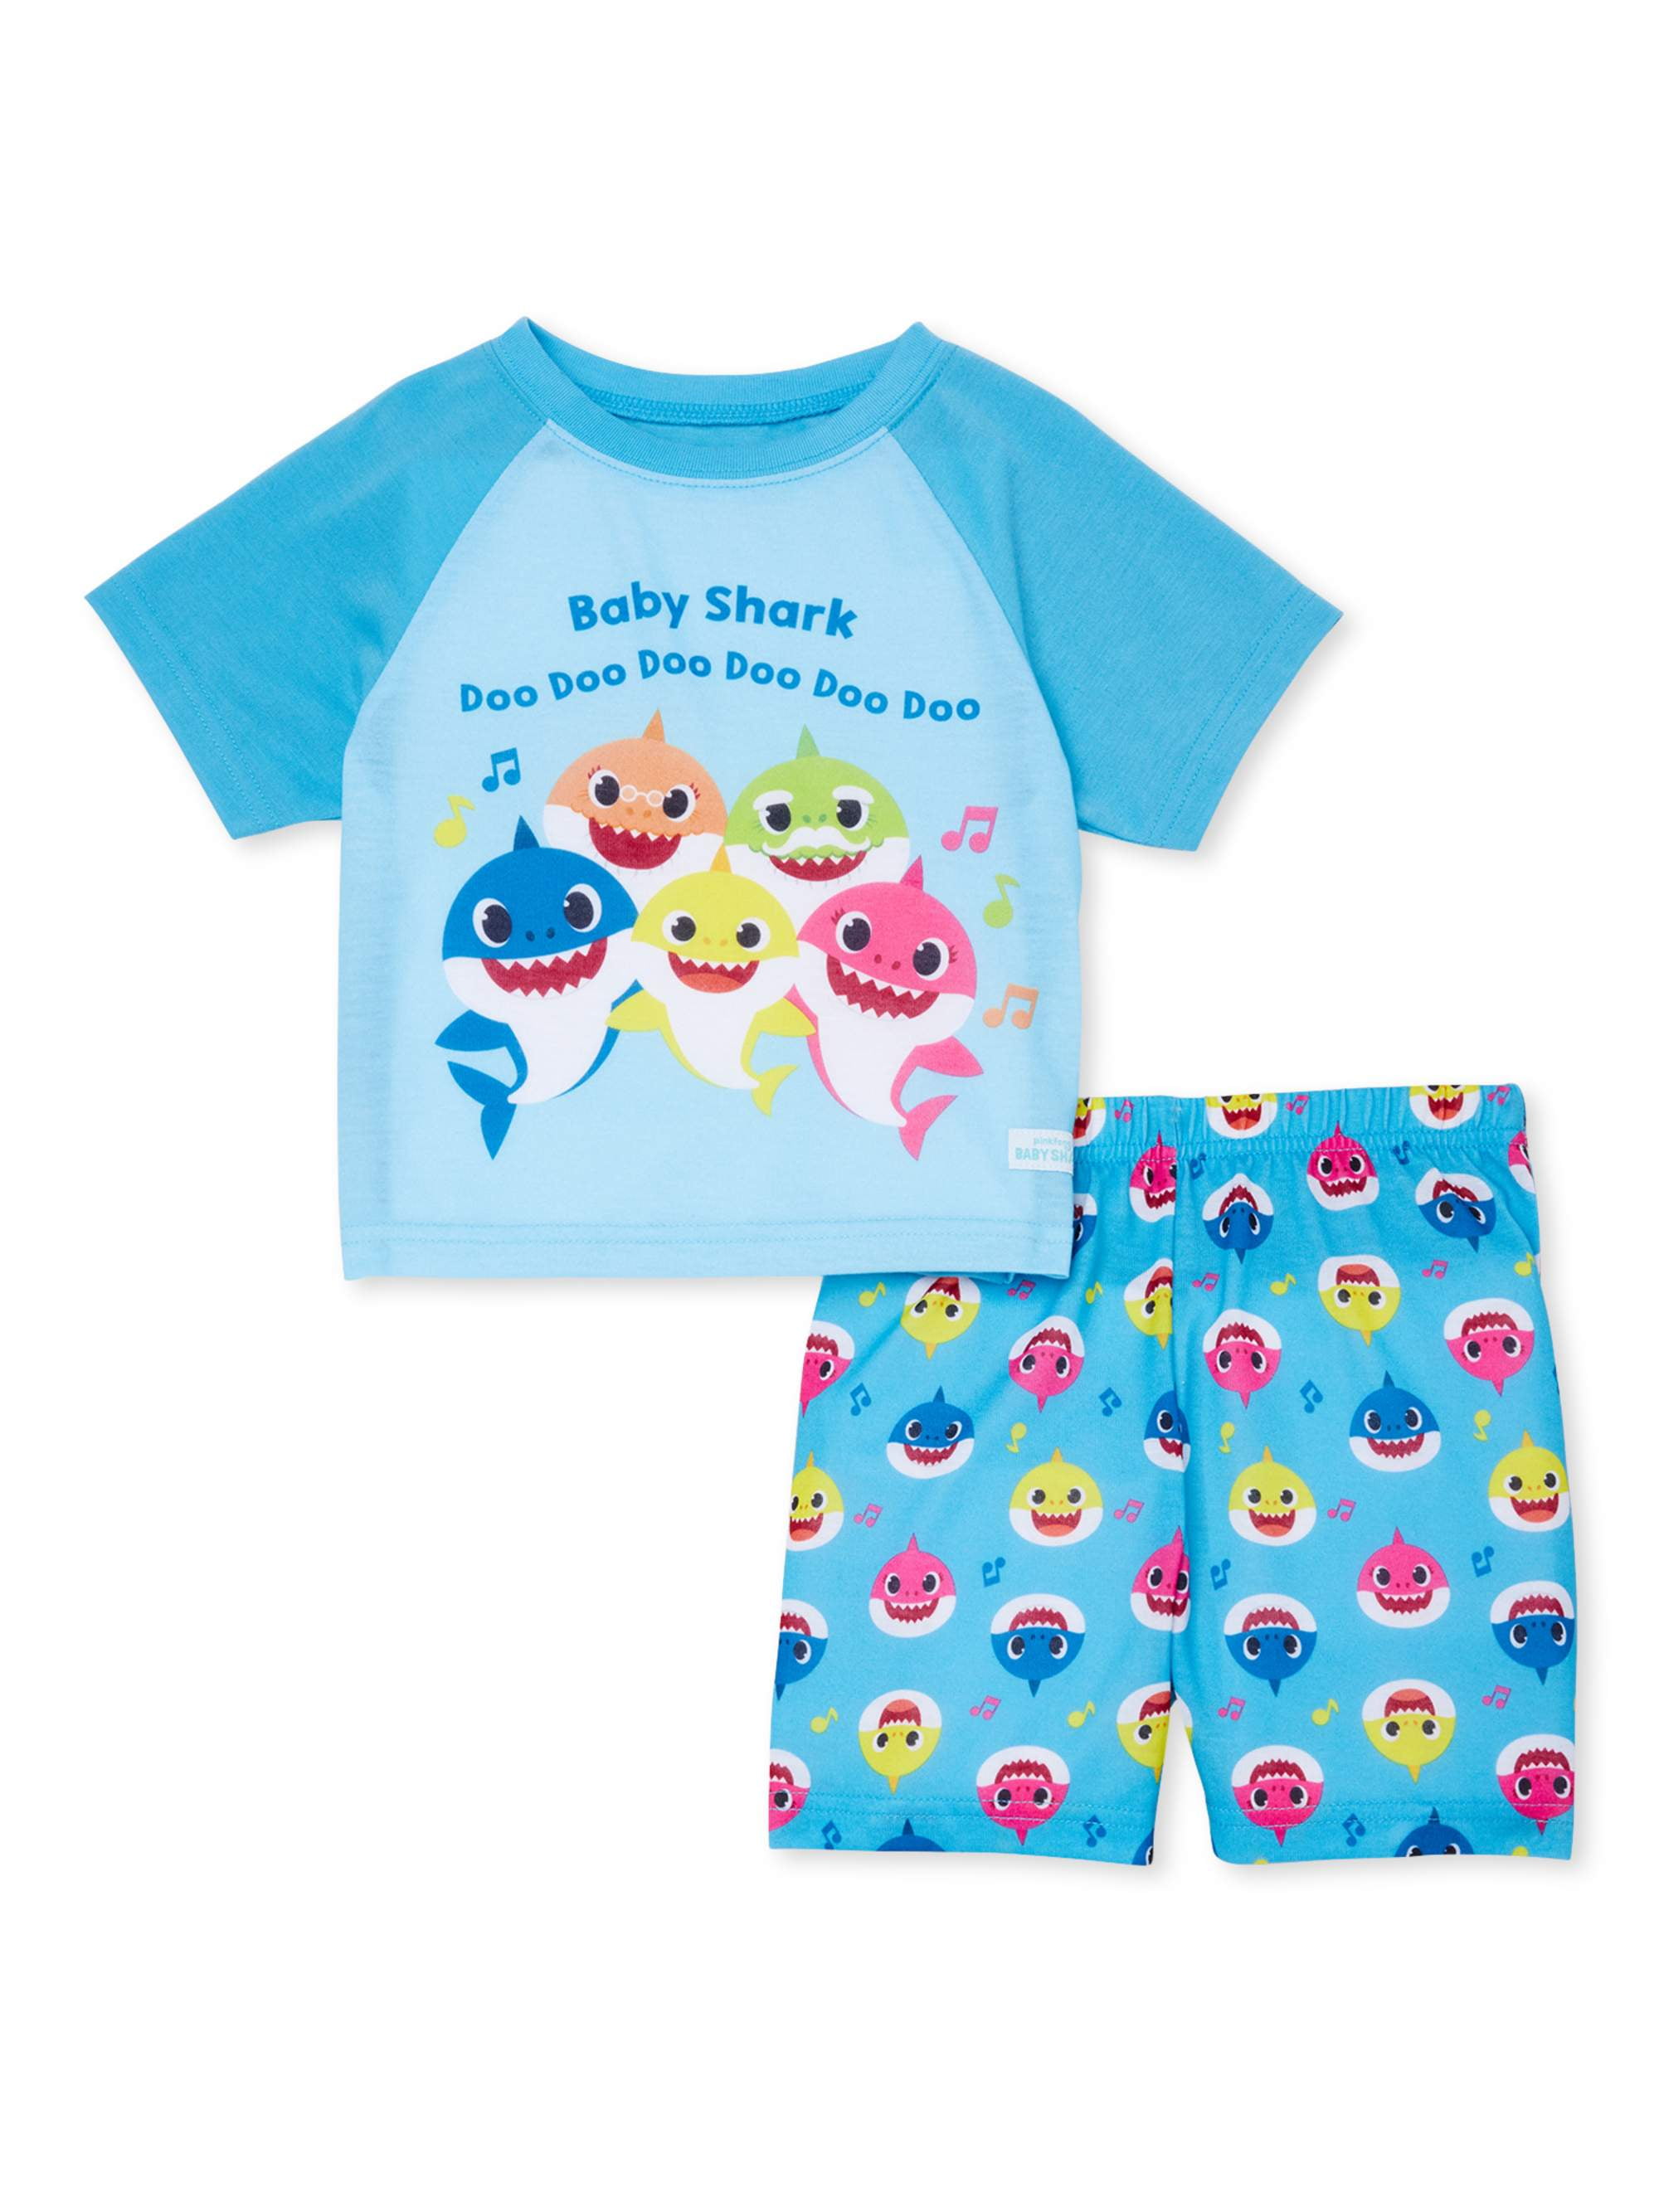 Baby Shark Toddler Boy or Girl Unisex 